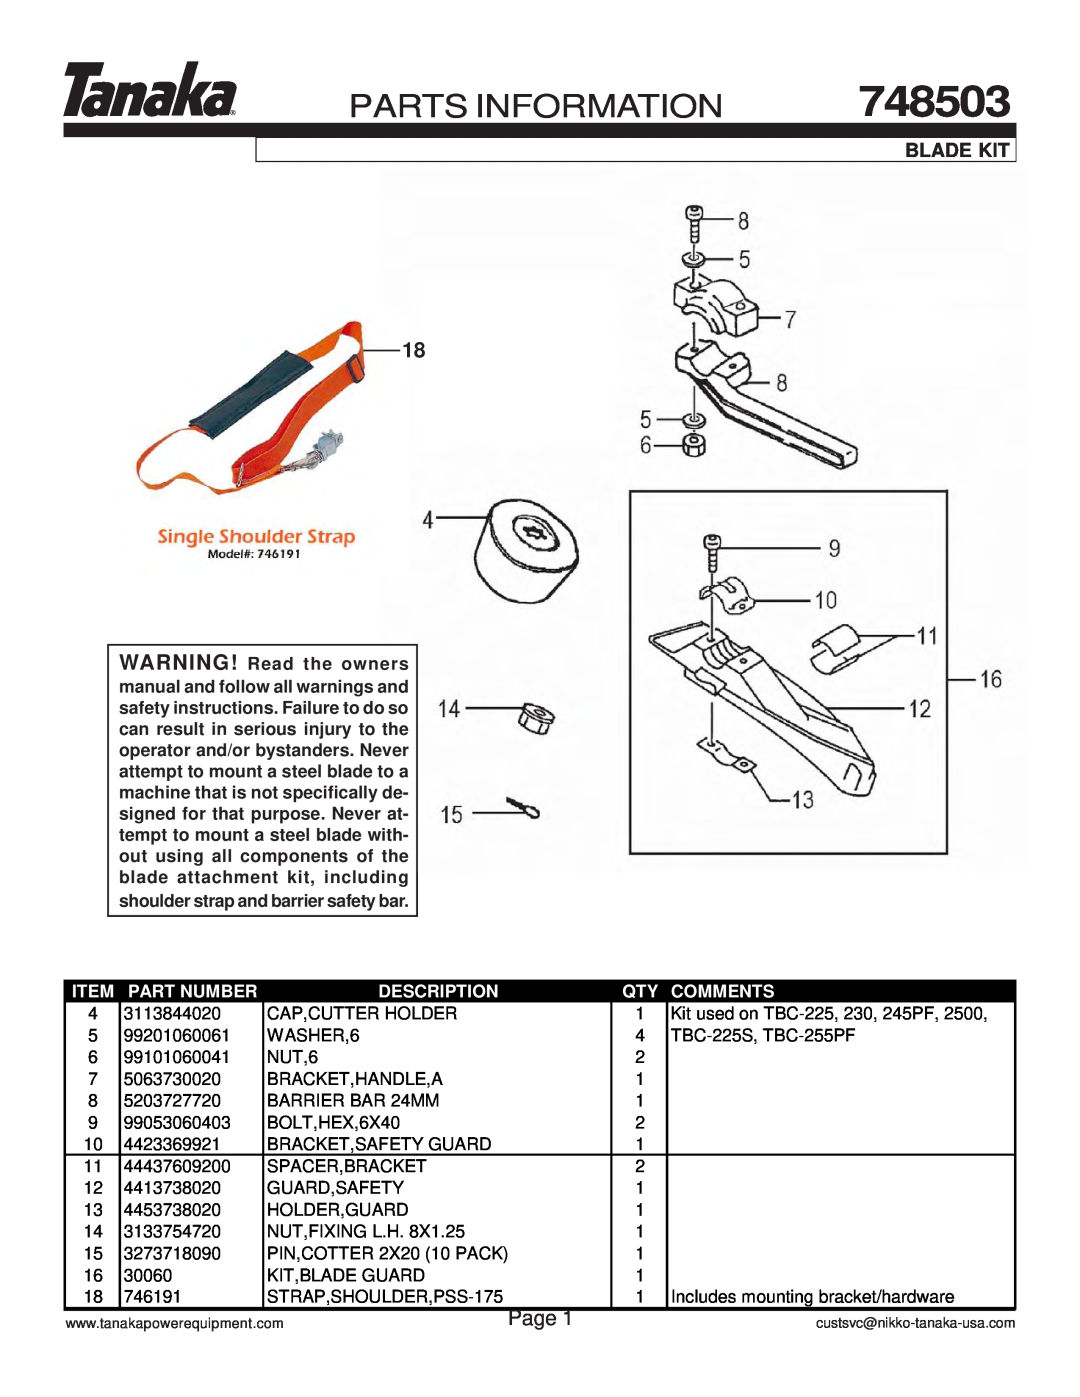 Tanaka TBC-230 manual 748503, Parts Information, Page, Blade Kit, Part Number, Description, Comments 